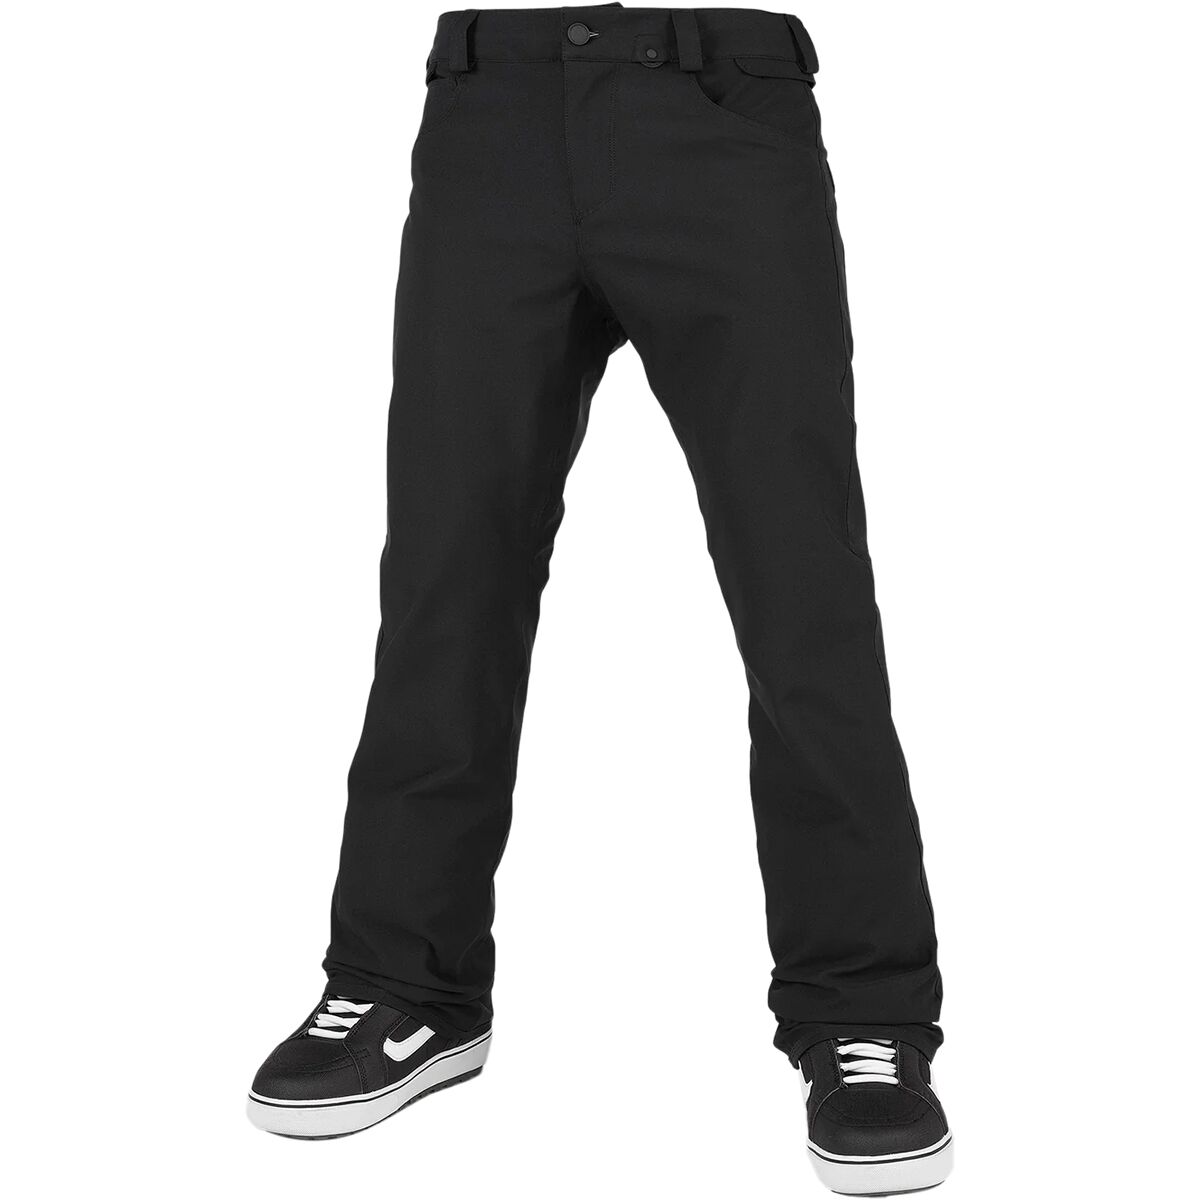 Volcom 5-Pocket Tight Pant - Men's